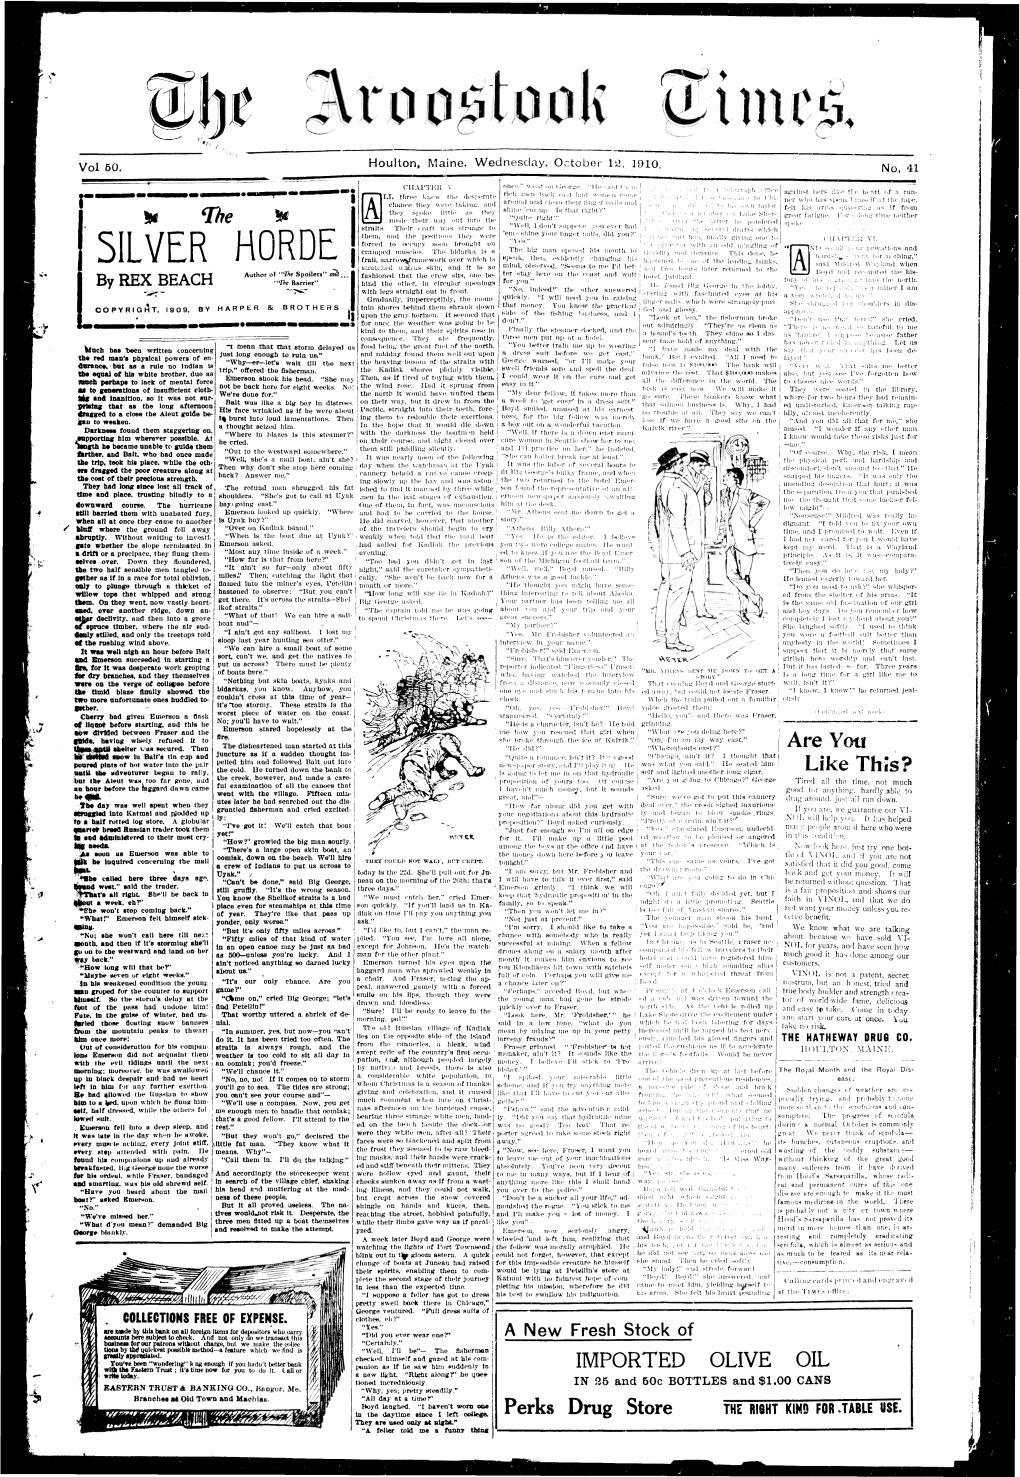 The Aroostook Times, October 12, 1910